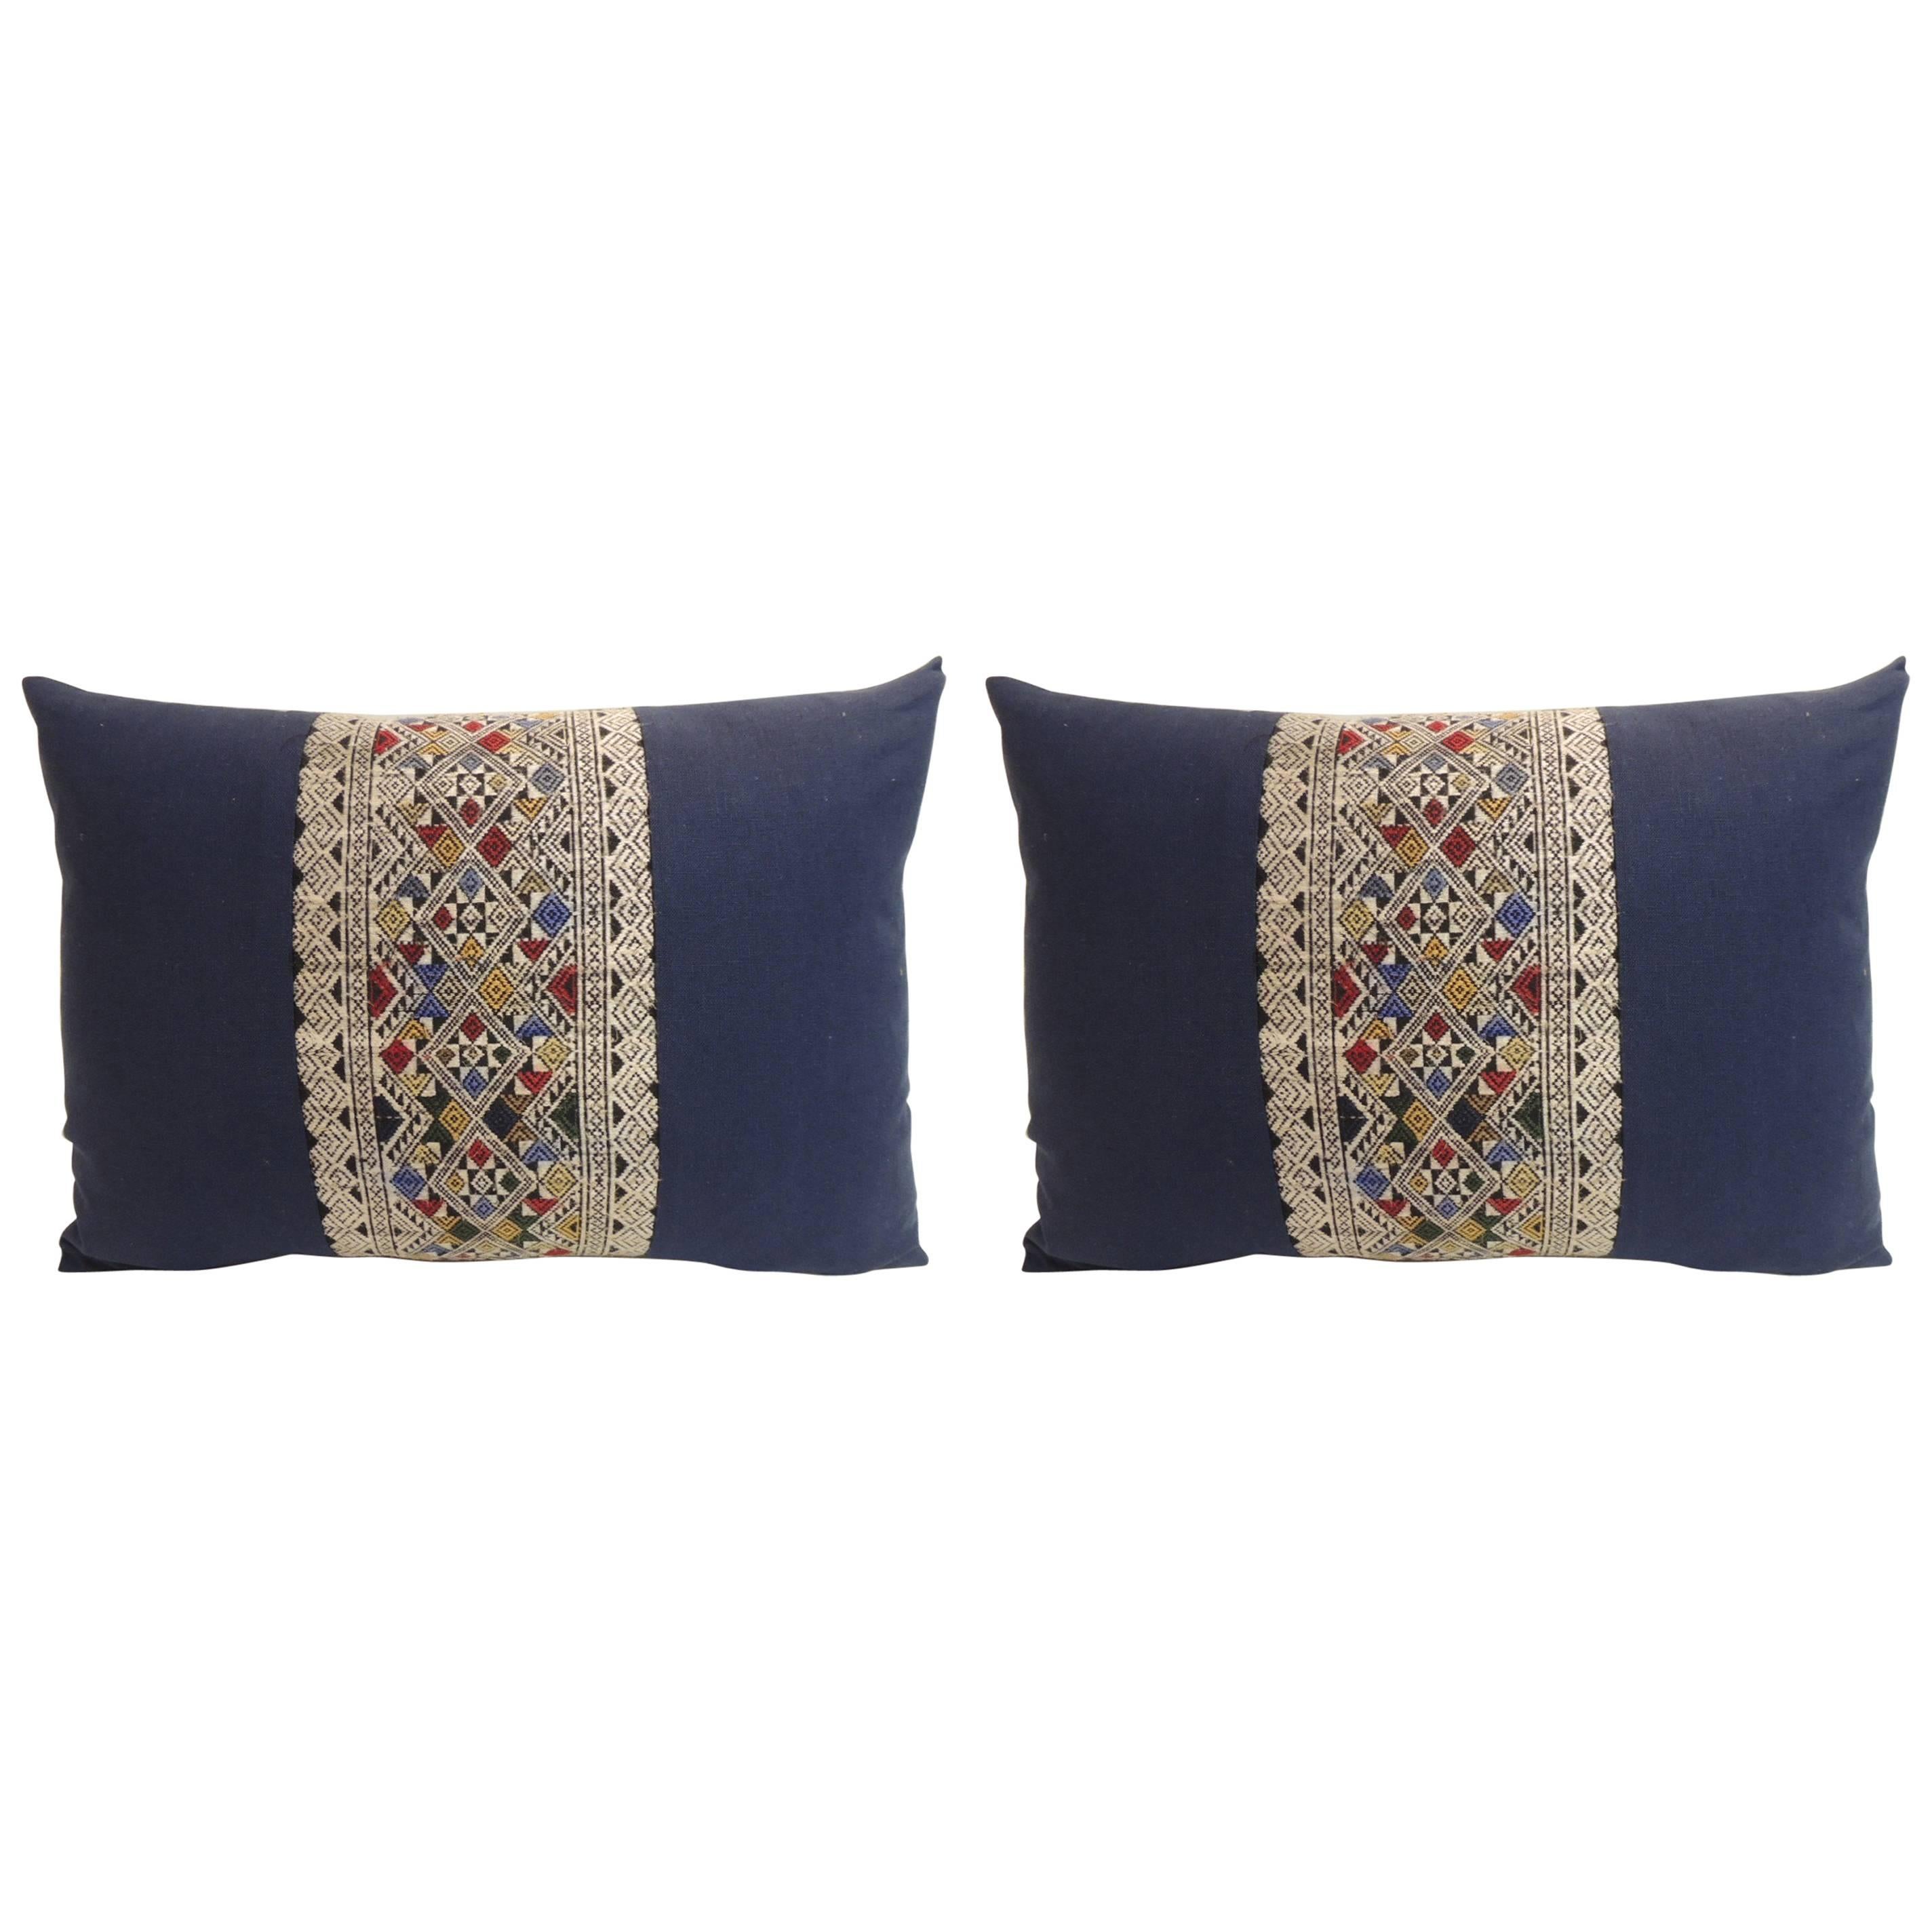 Pair of Vintage Embroidered Asian Decorative Lumbar Pillows